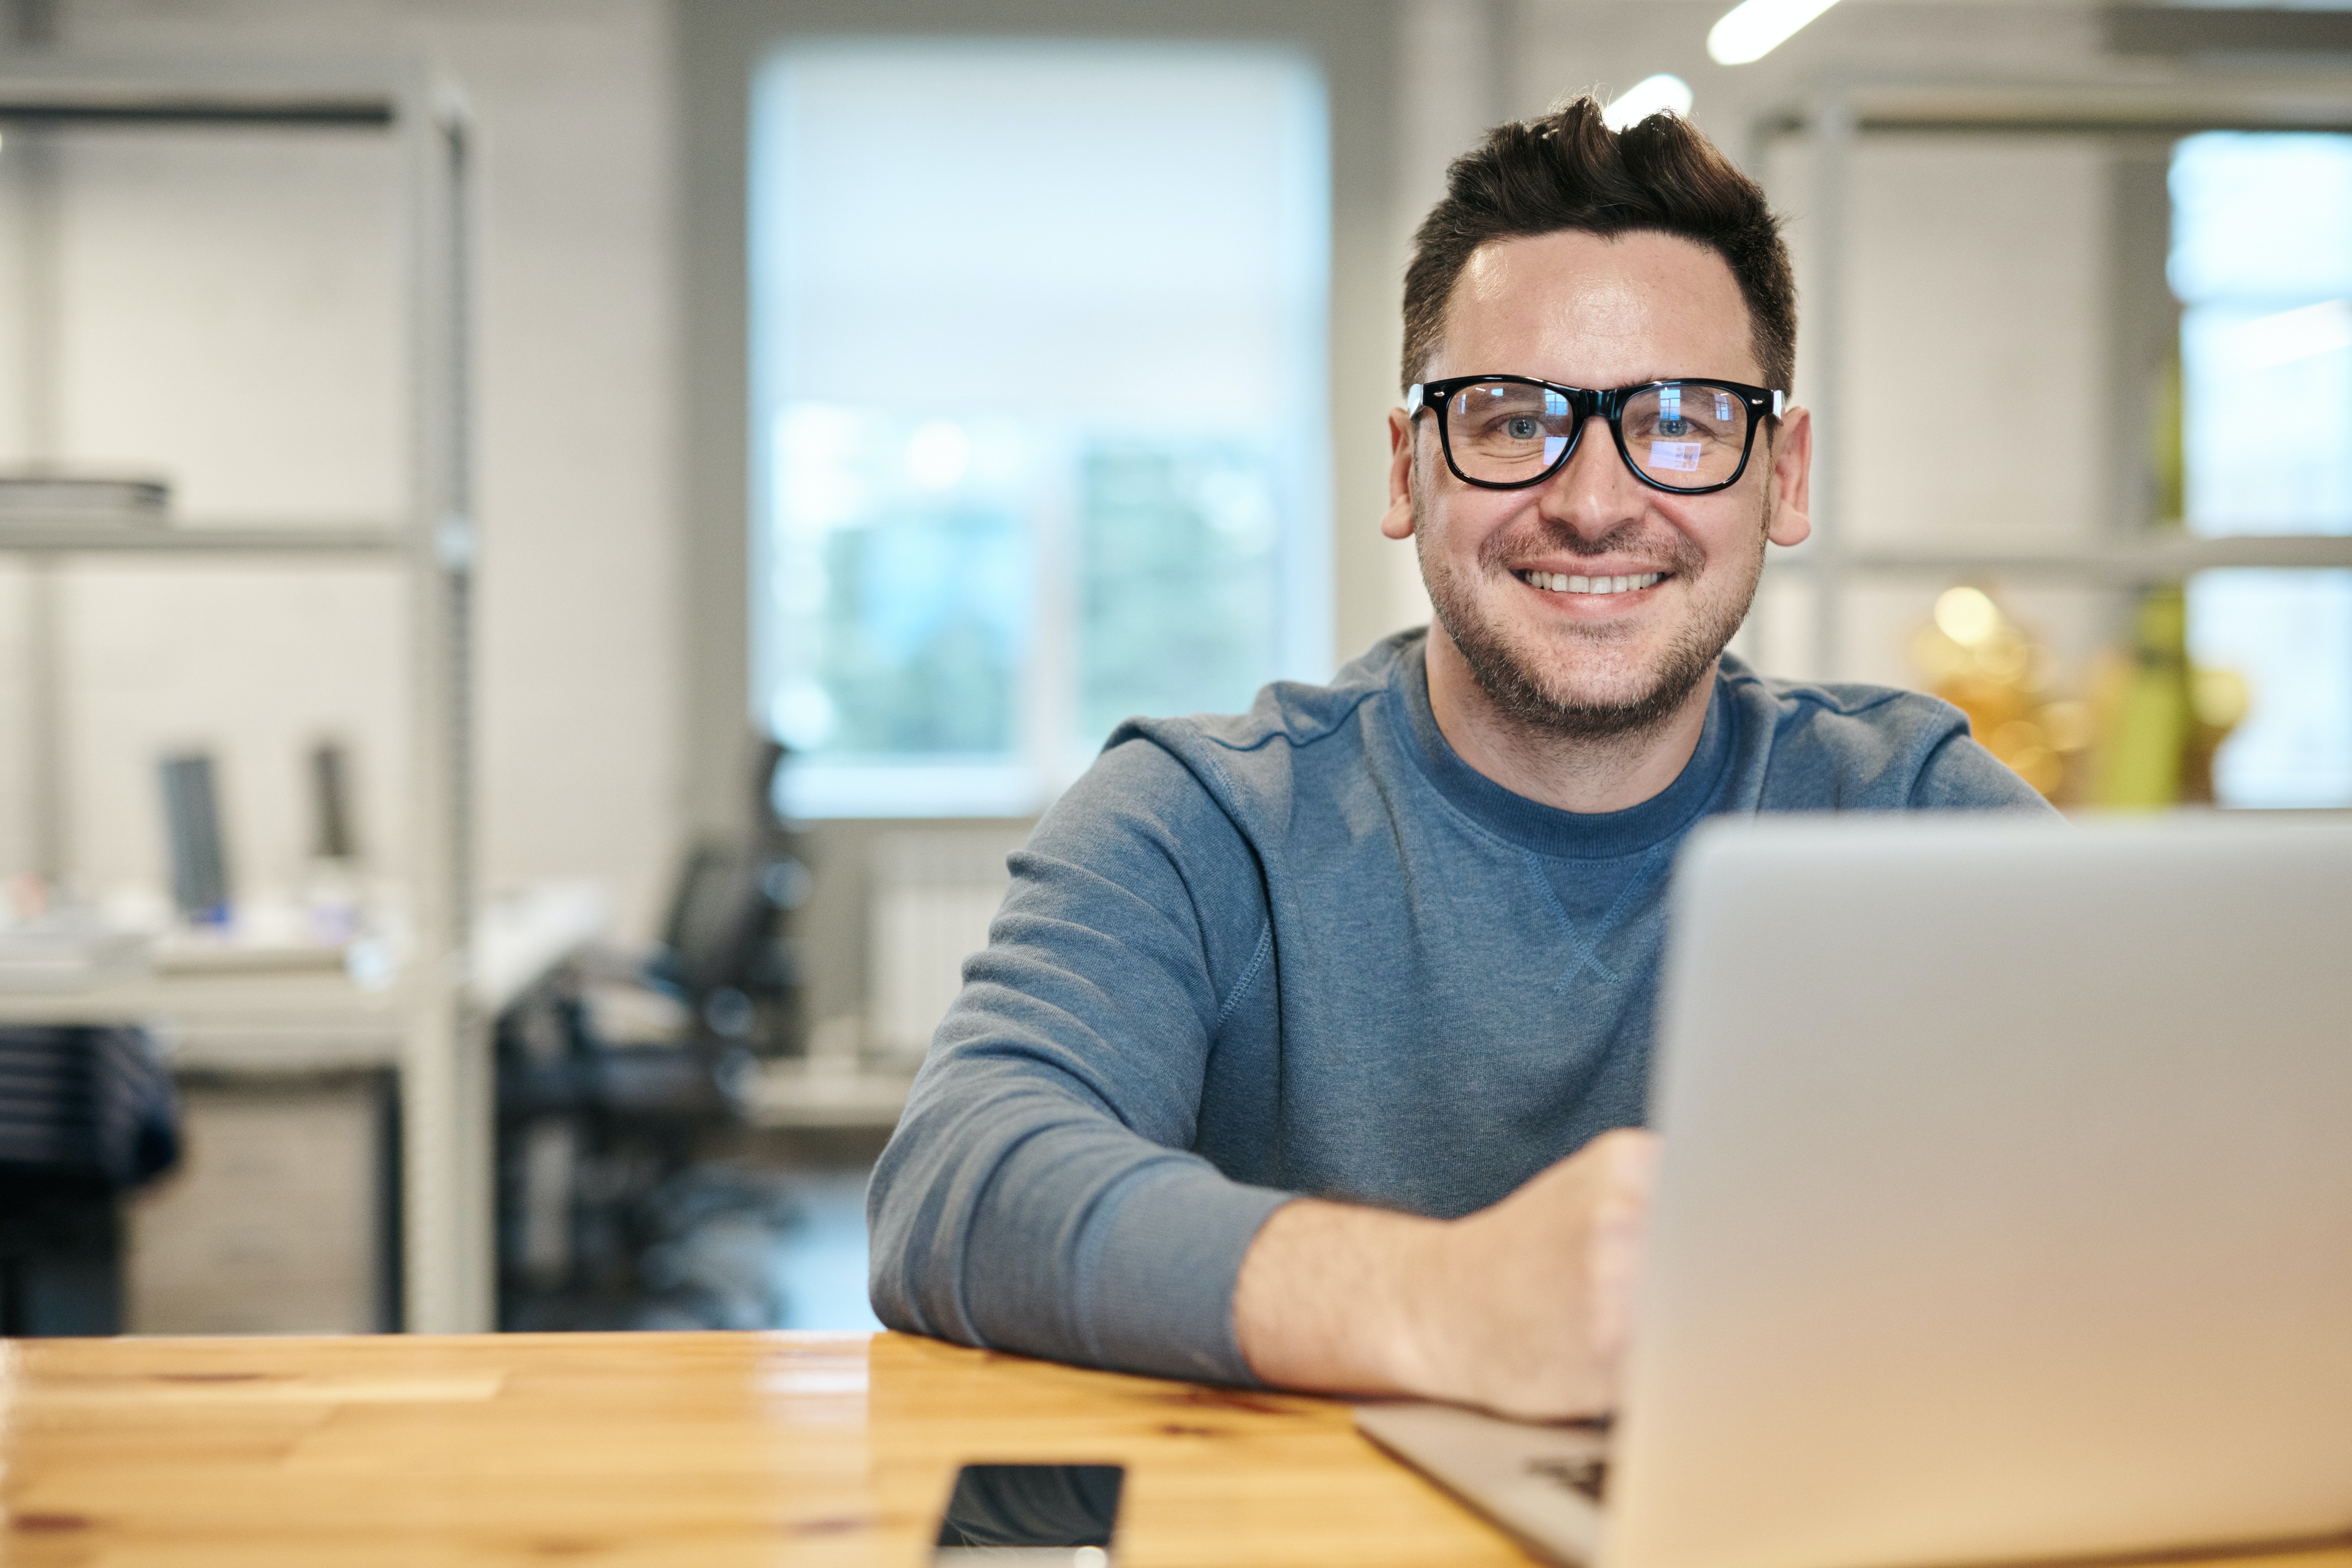 Man wearing glasses using a laptop